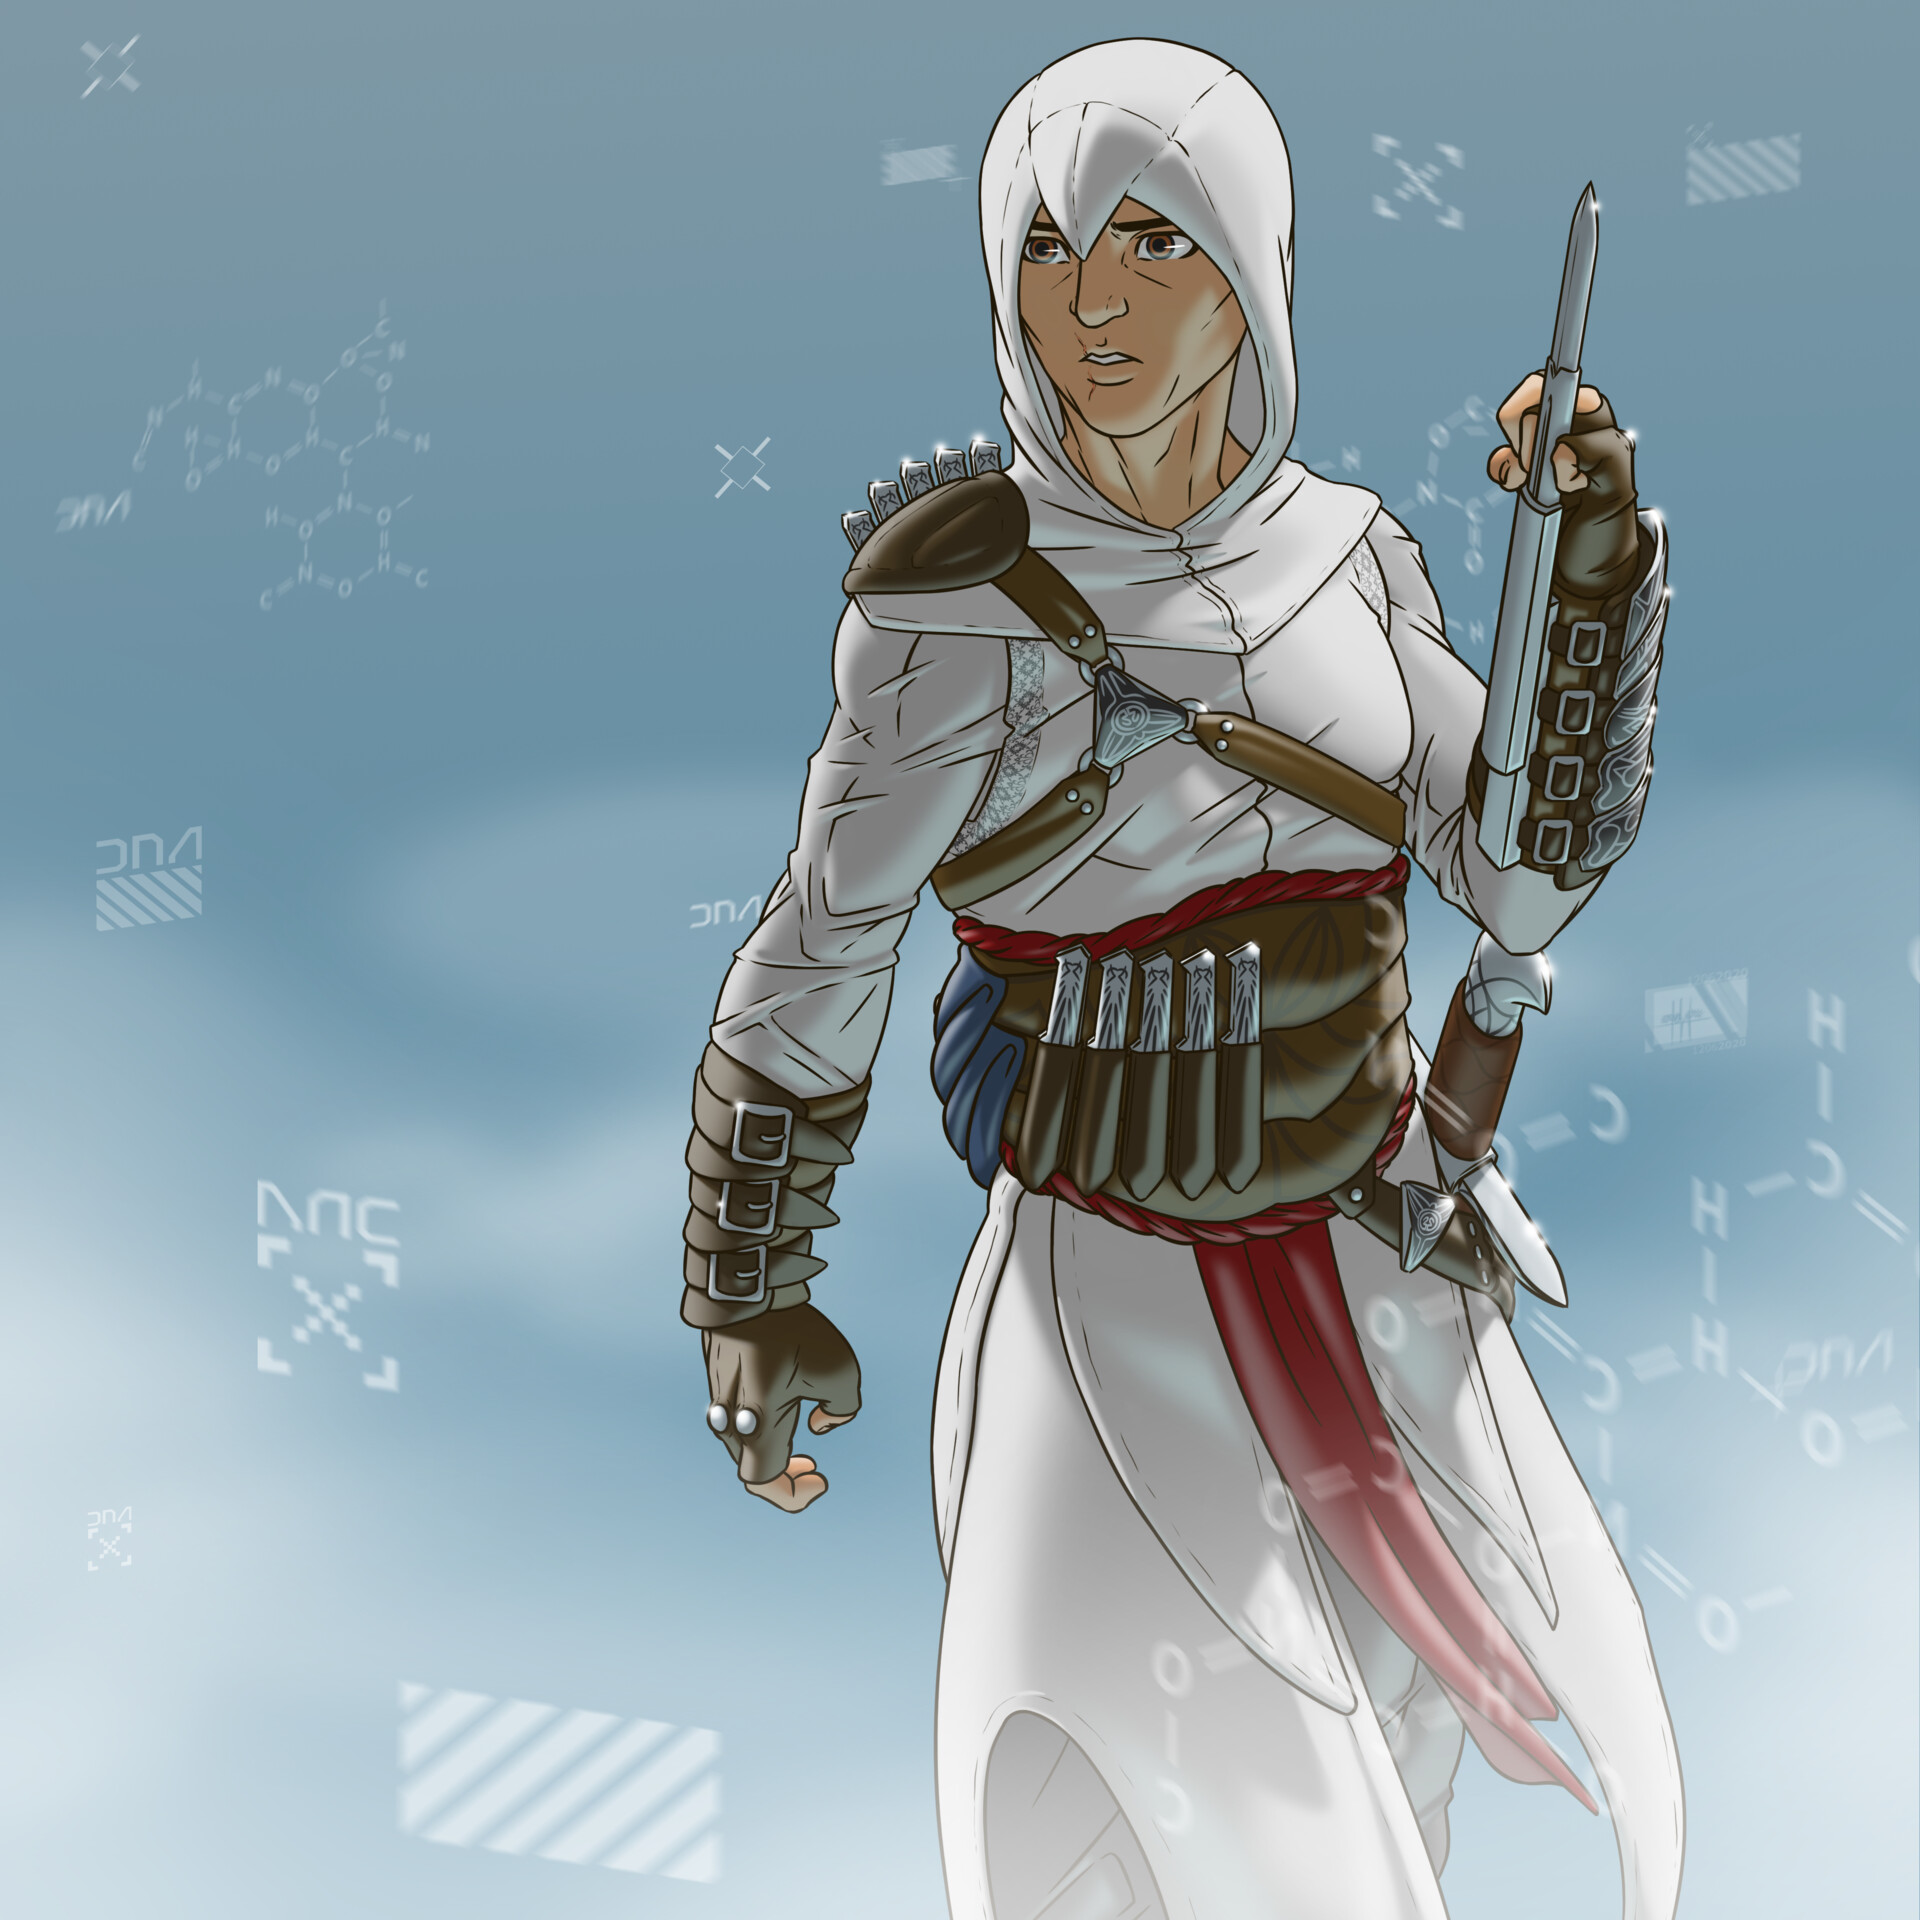 Assassins Creed Anime Announced